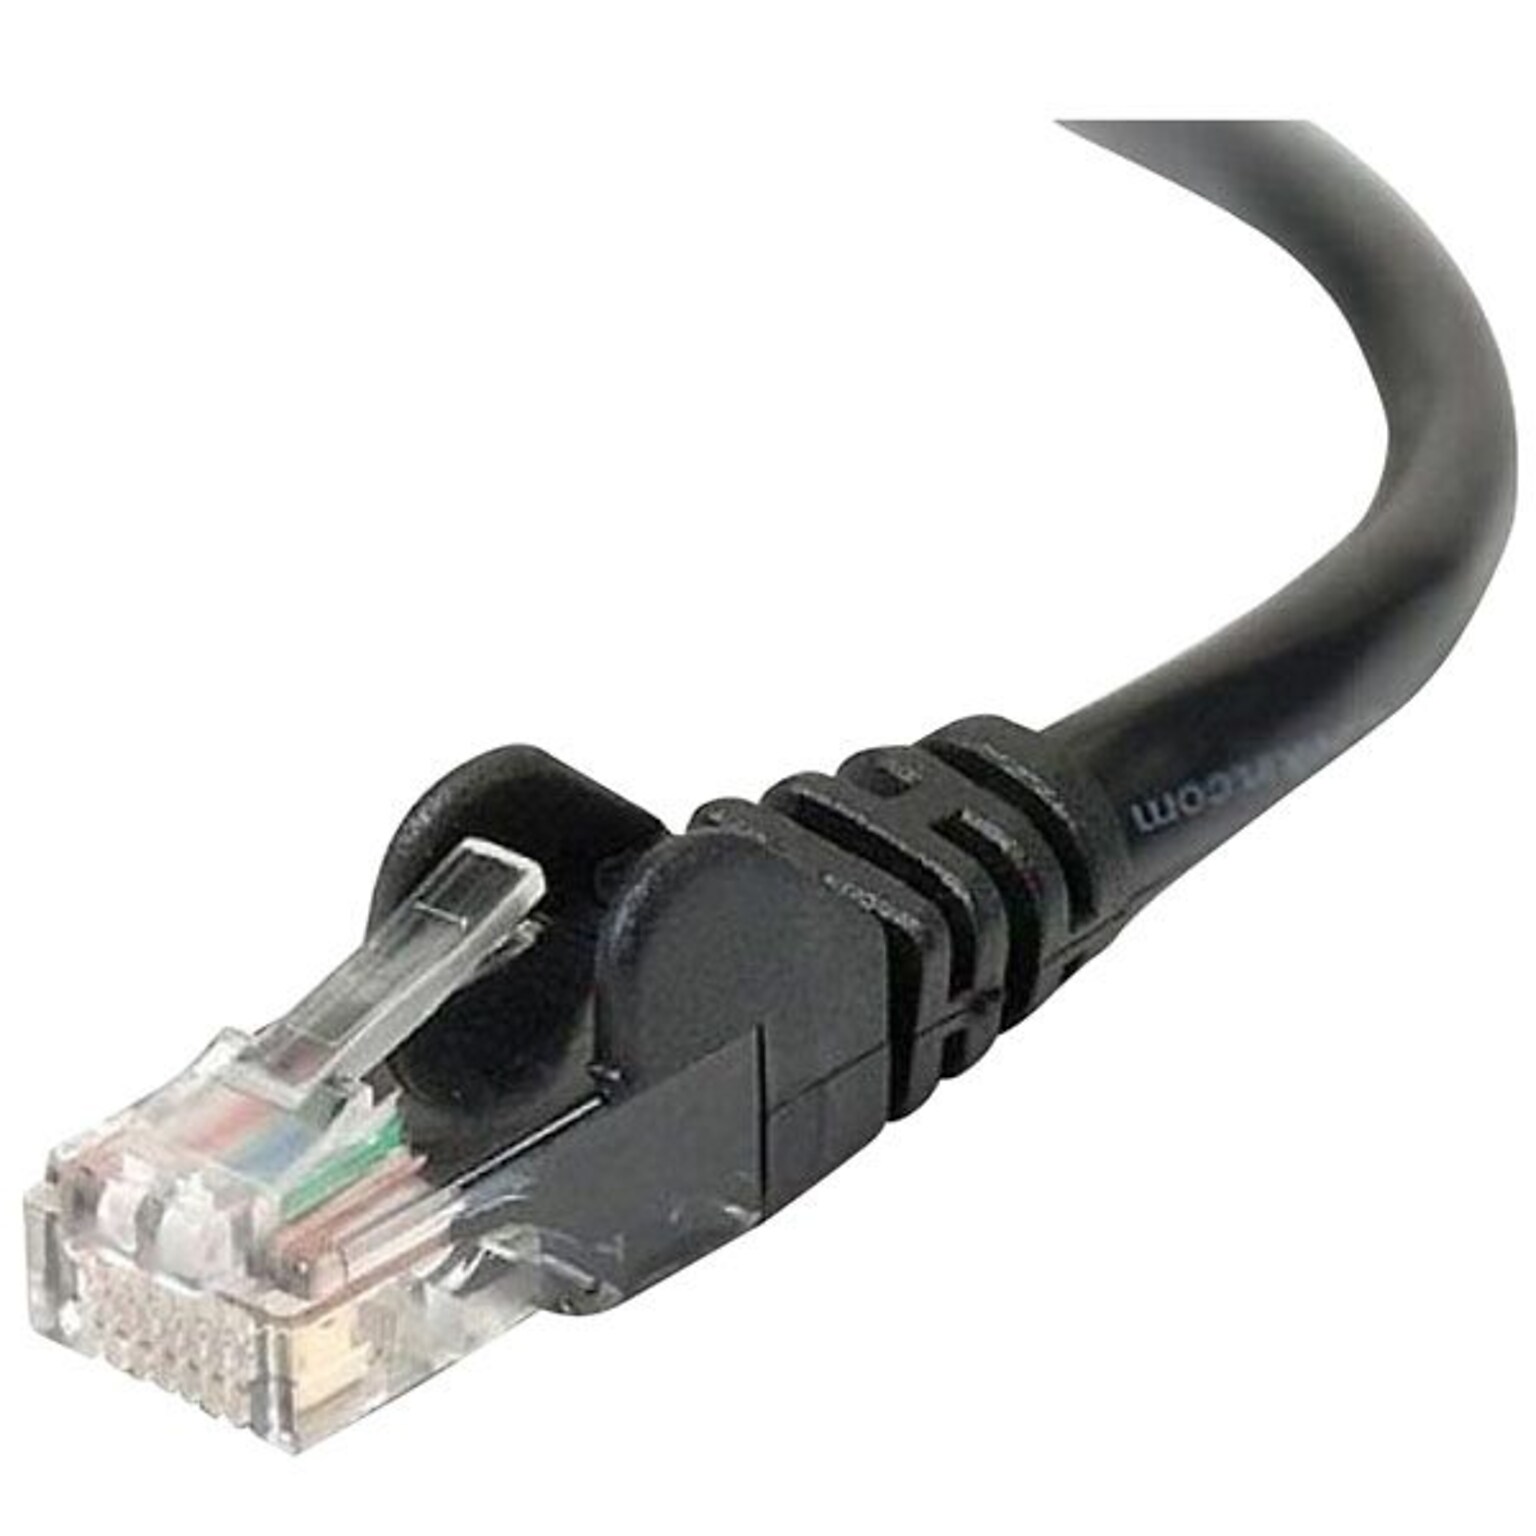 Belkin™ 6 RJ-45 Male/Male Cat6 Snagless Network Patch Cable, Black